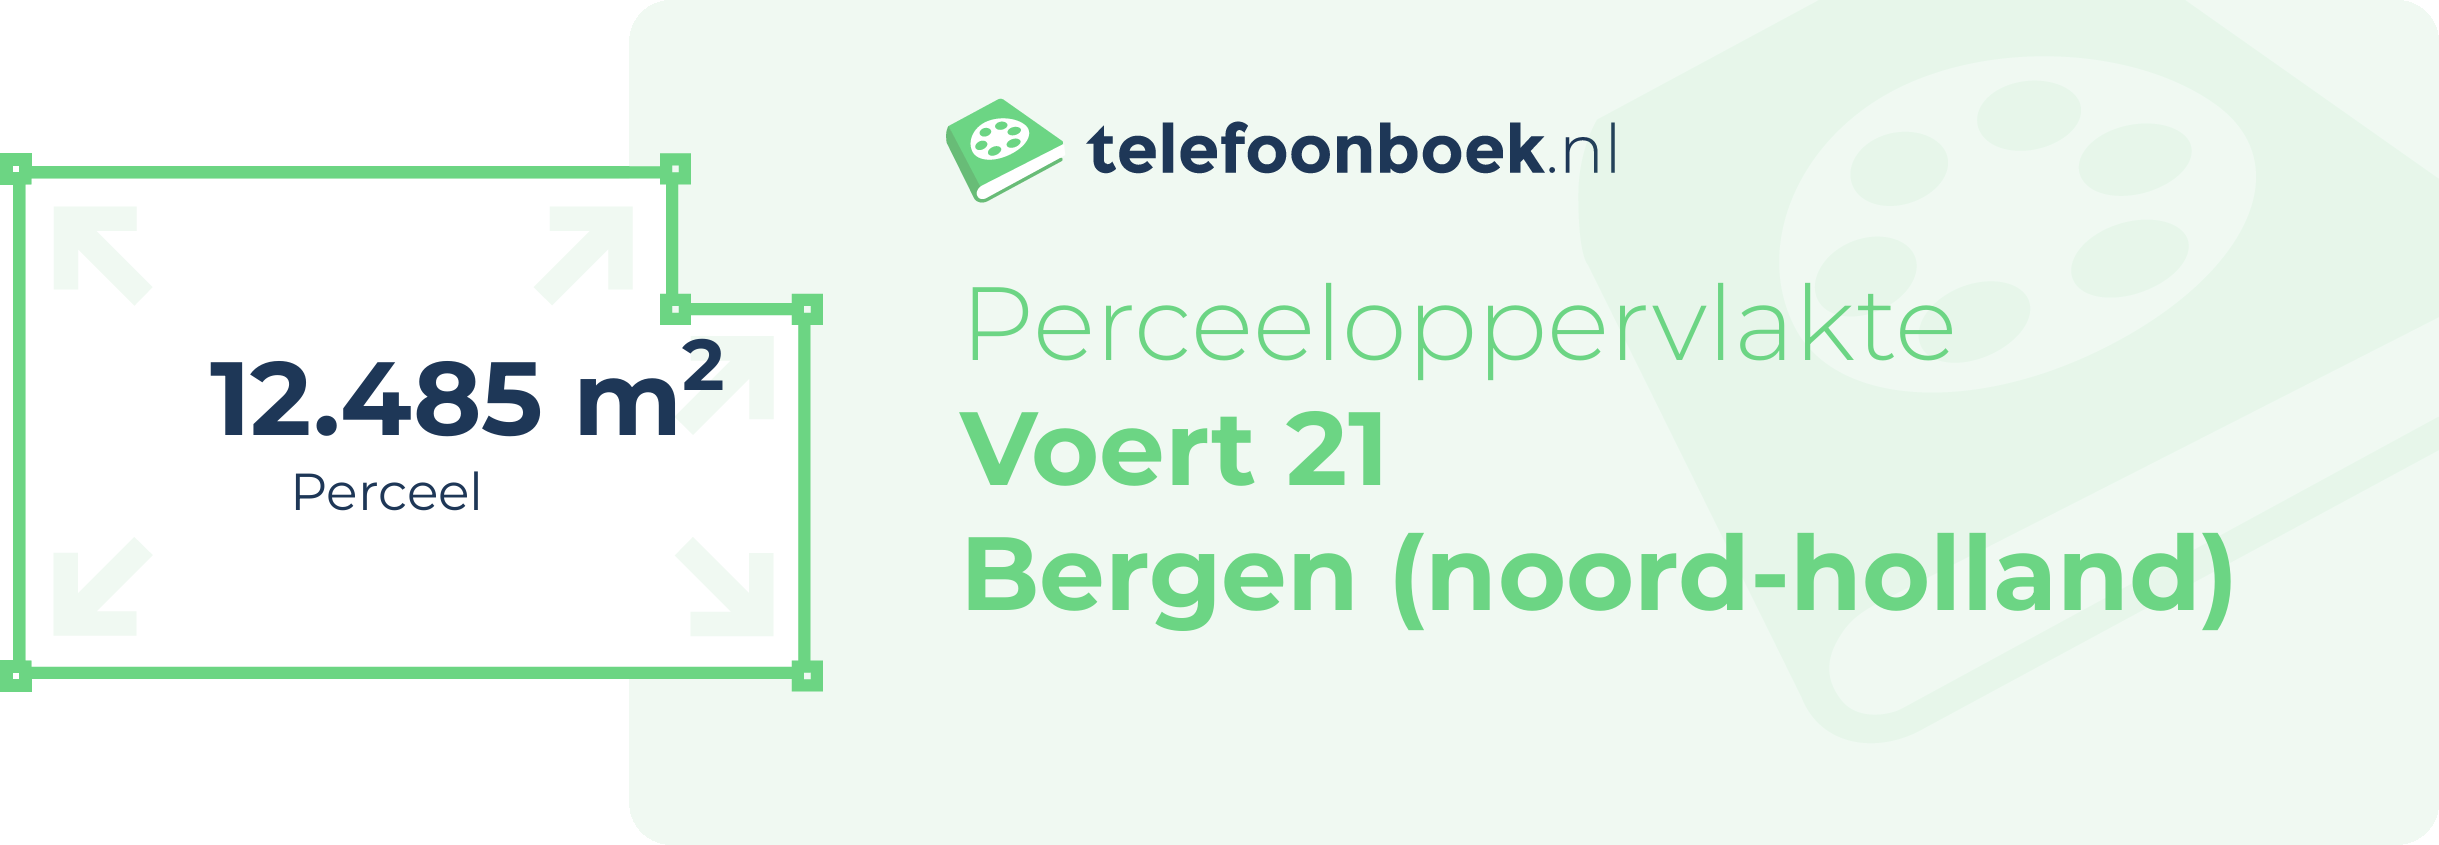 Perceeloppervlakte Voert 21 Bergen (Noord-Holland)